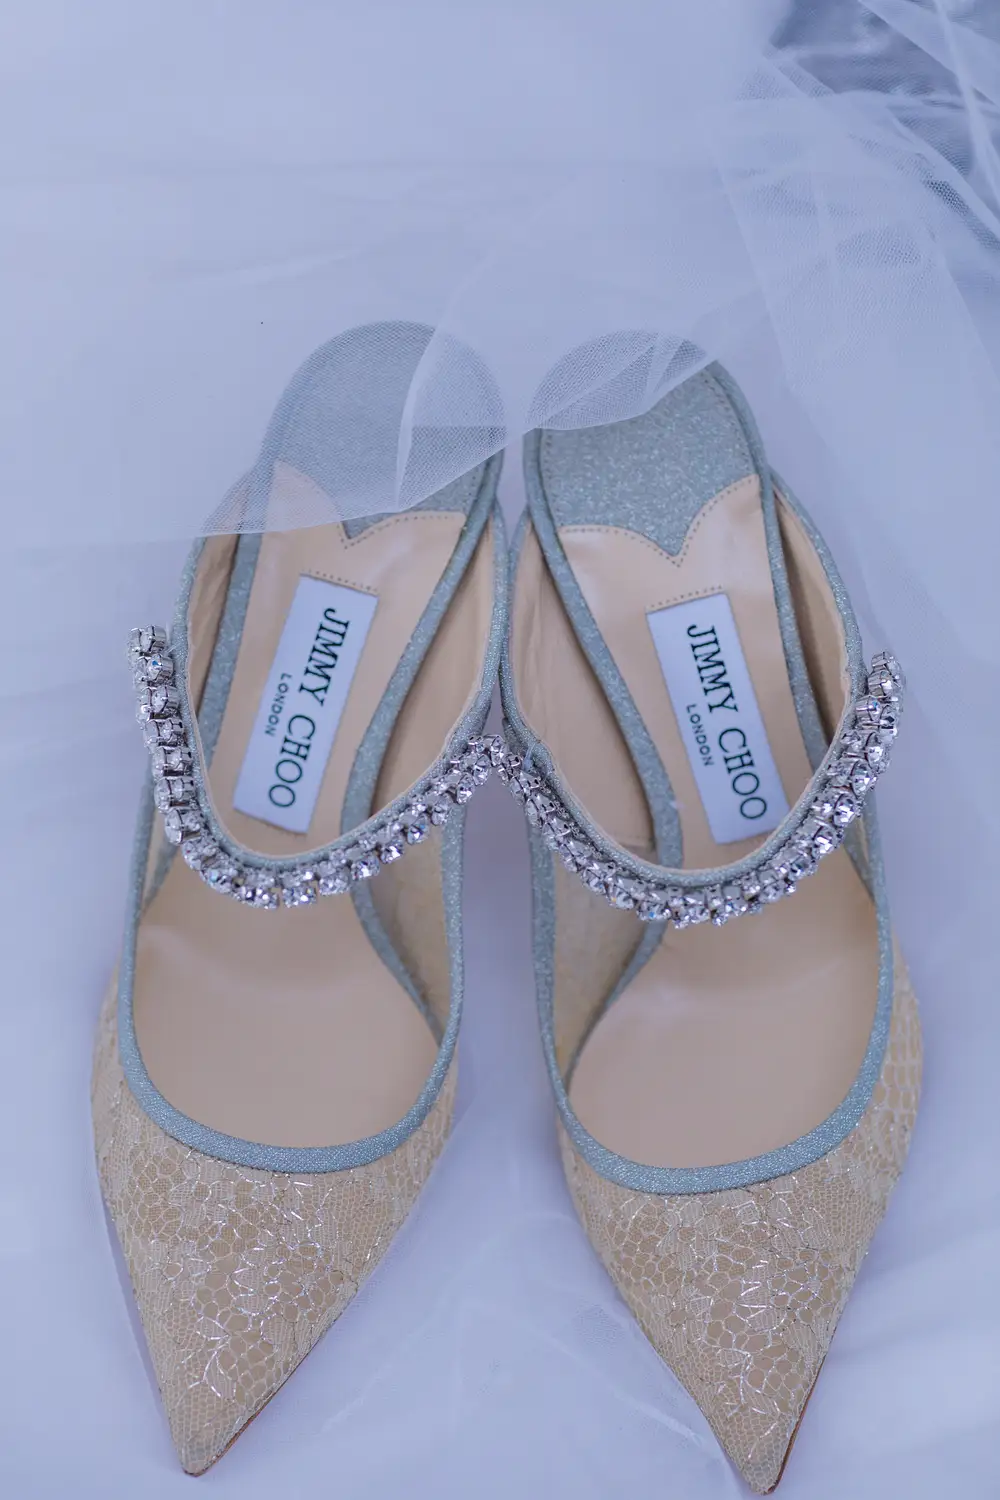 Diamond studded white shoes